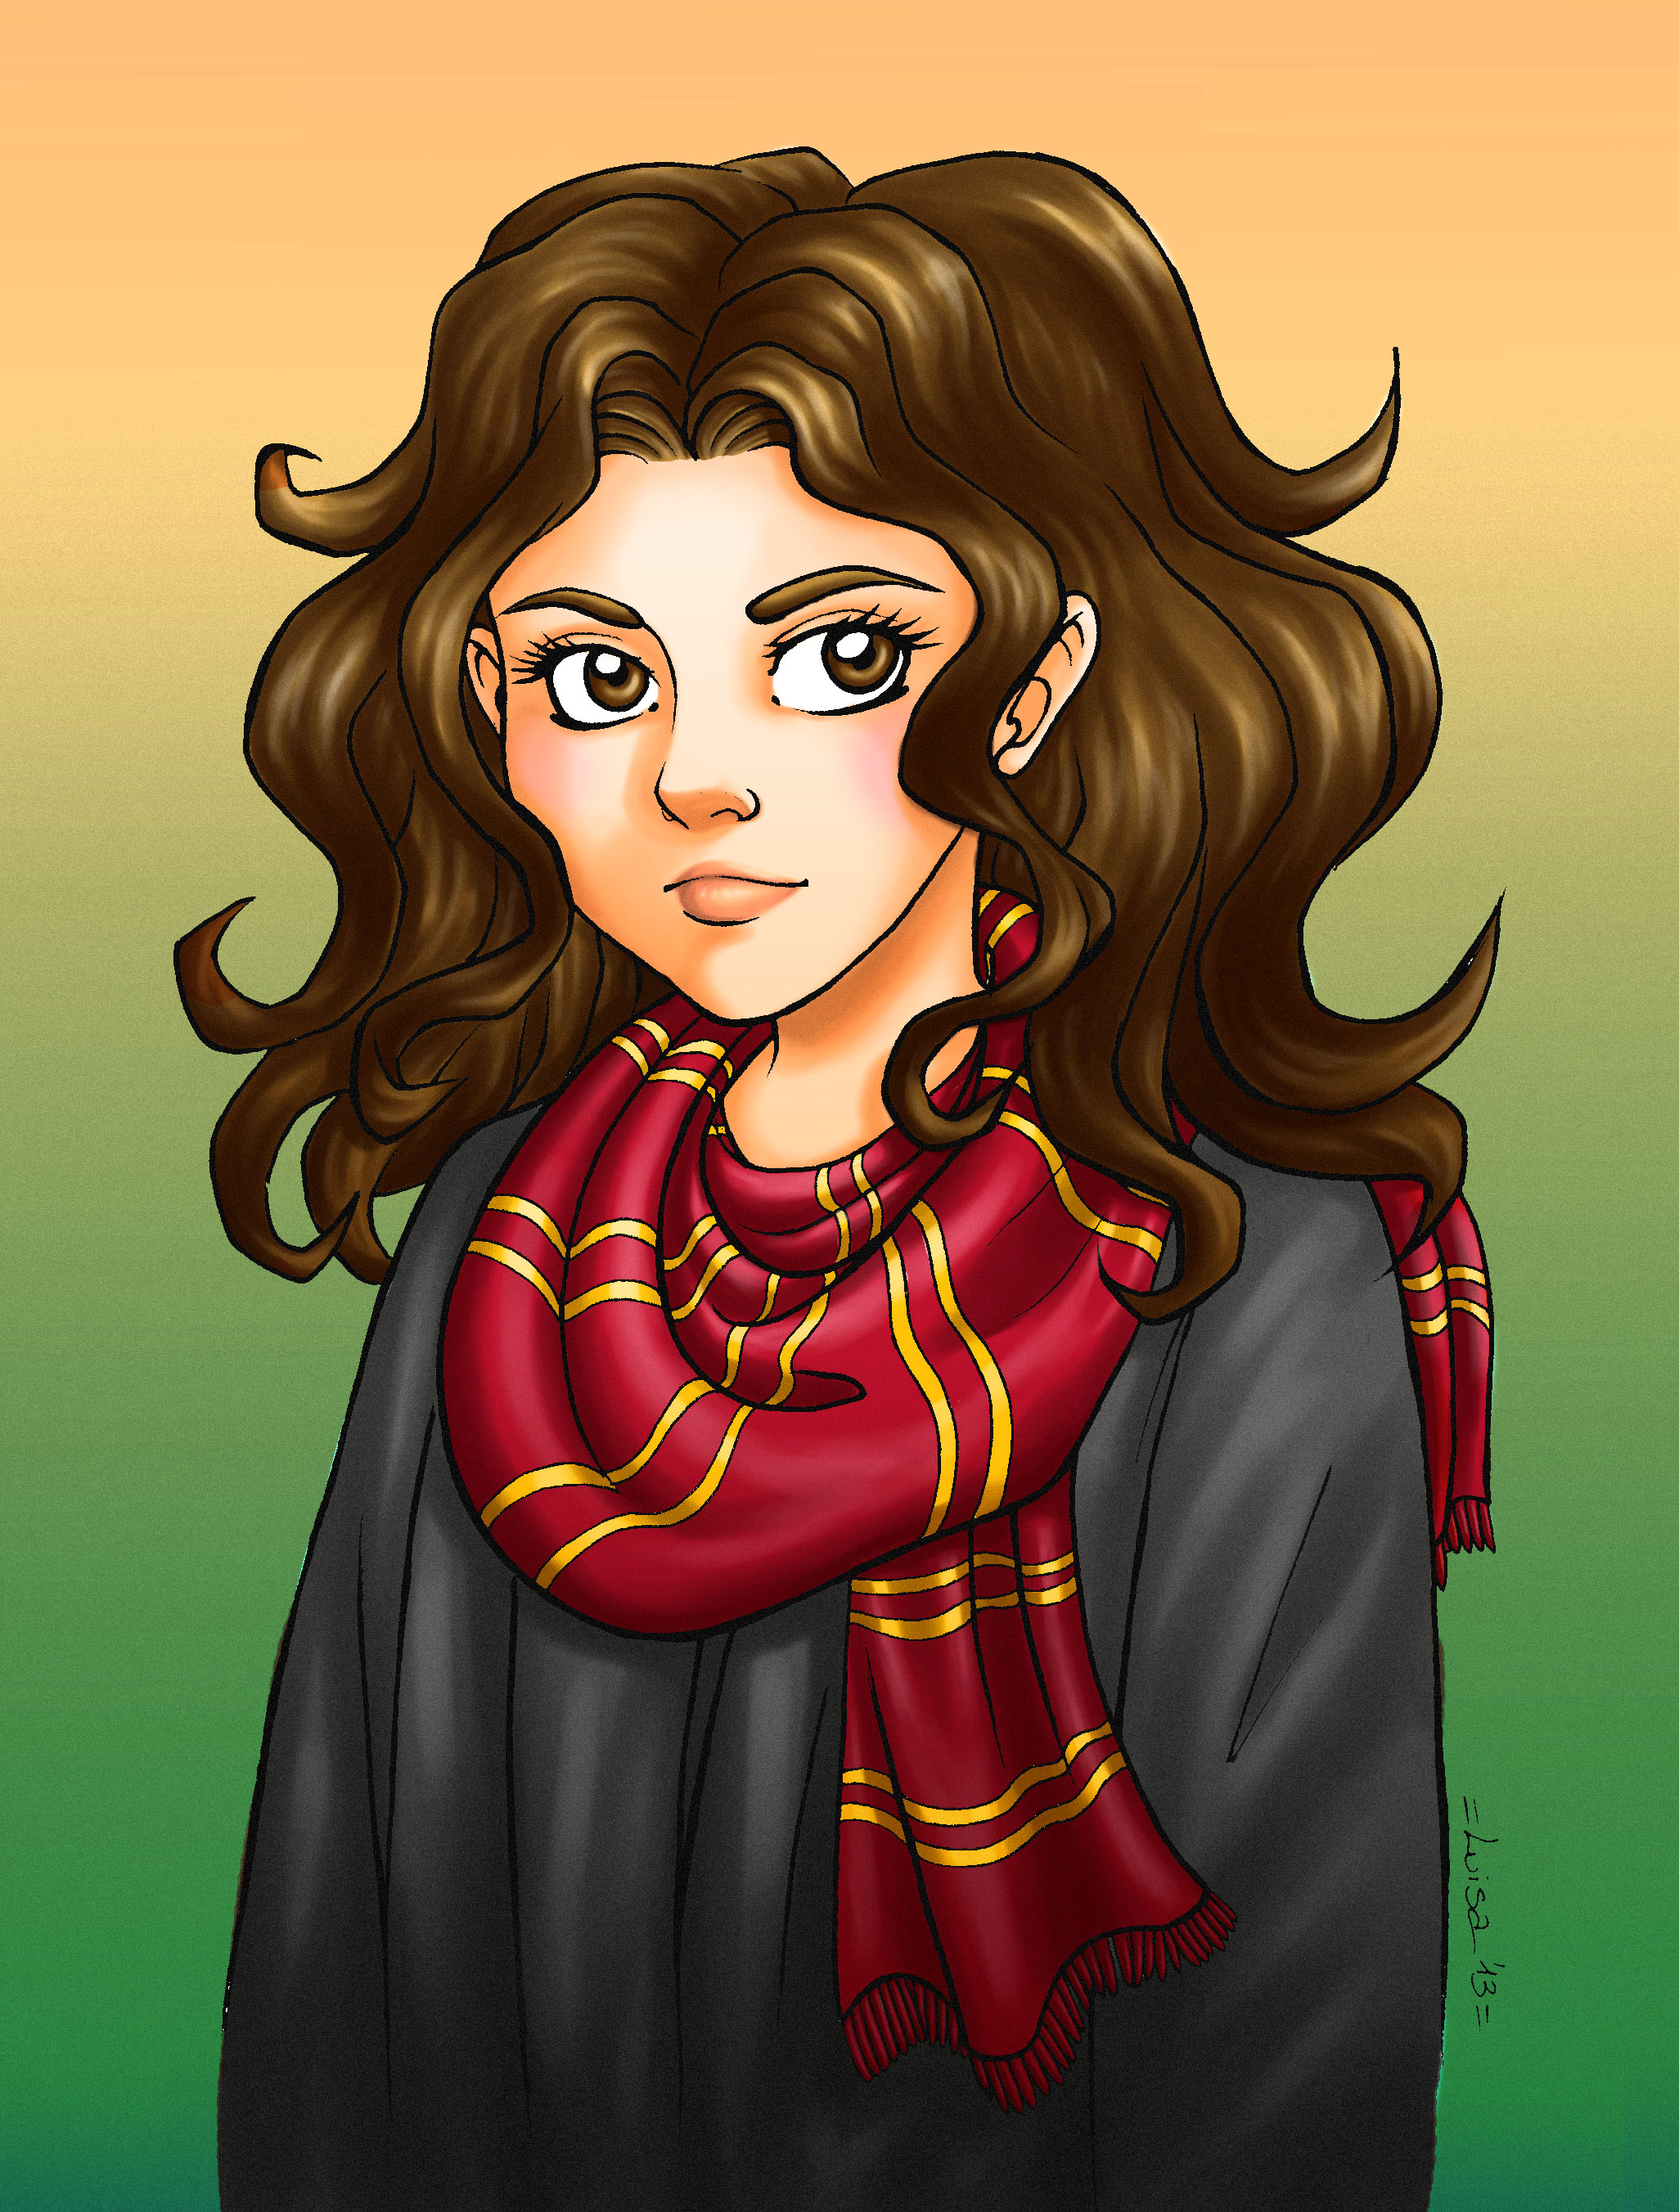 Happy birthday to my favorite fictional human 💛 #hermionegranger #hermione  #hermionefanart #hermionegrangerfanart #hermionejeangranger